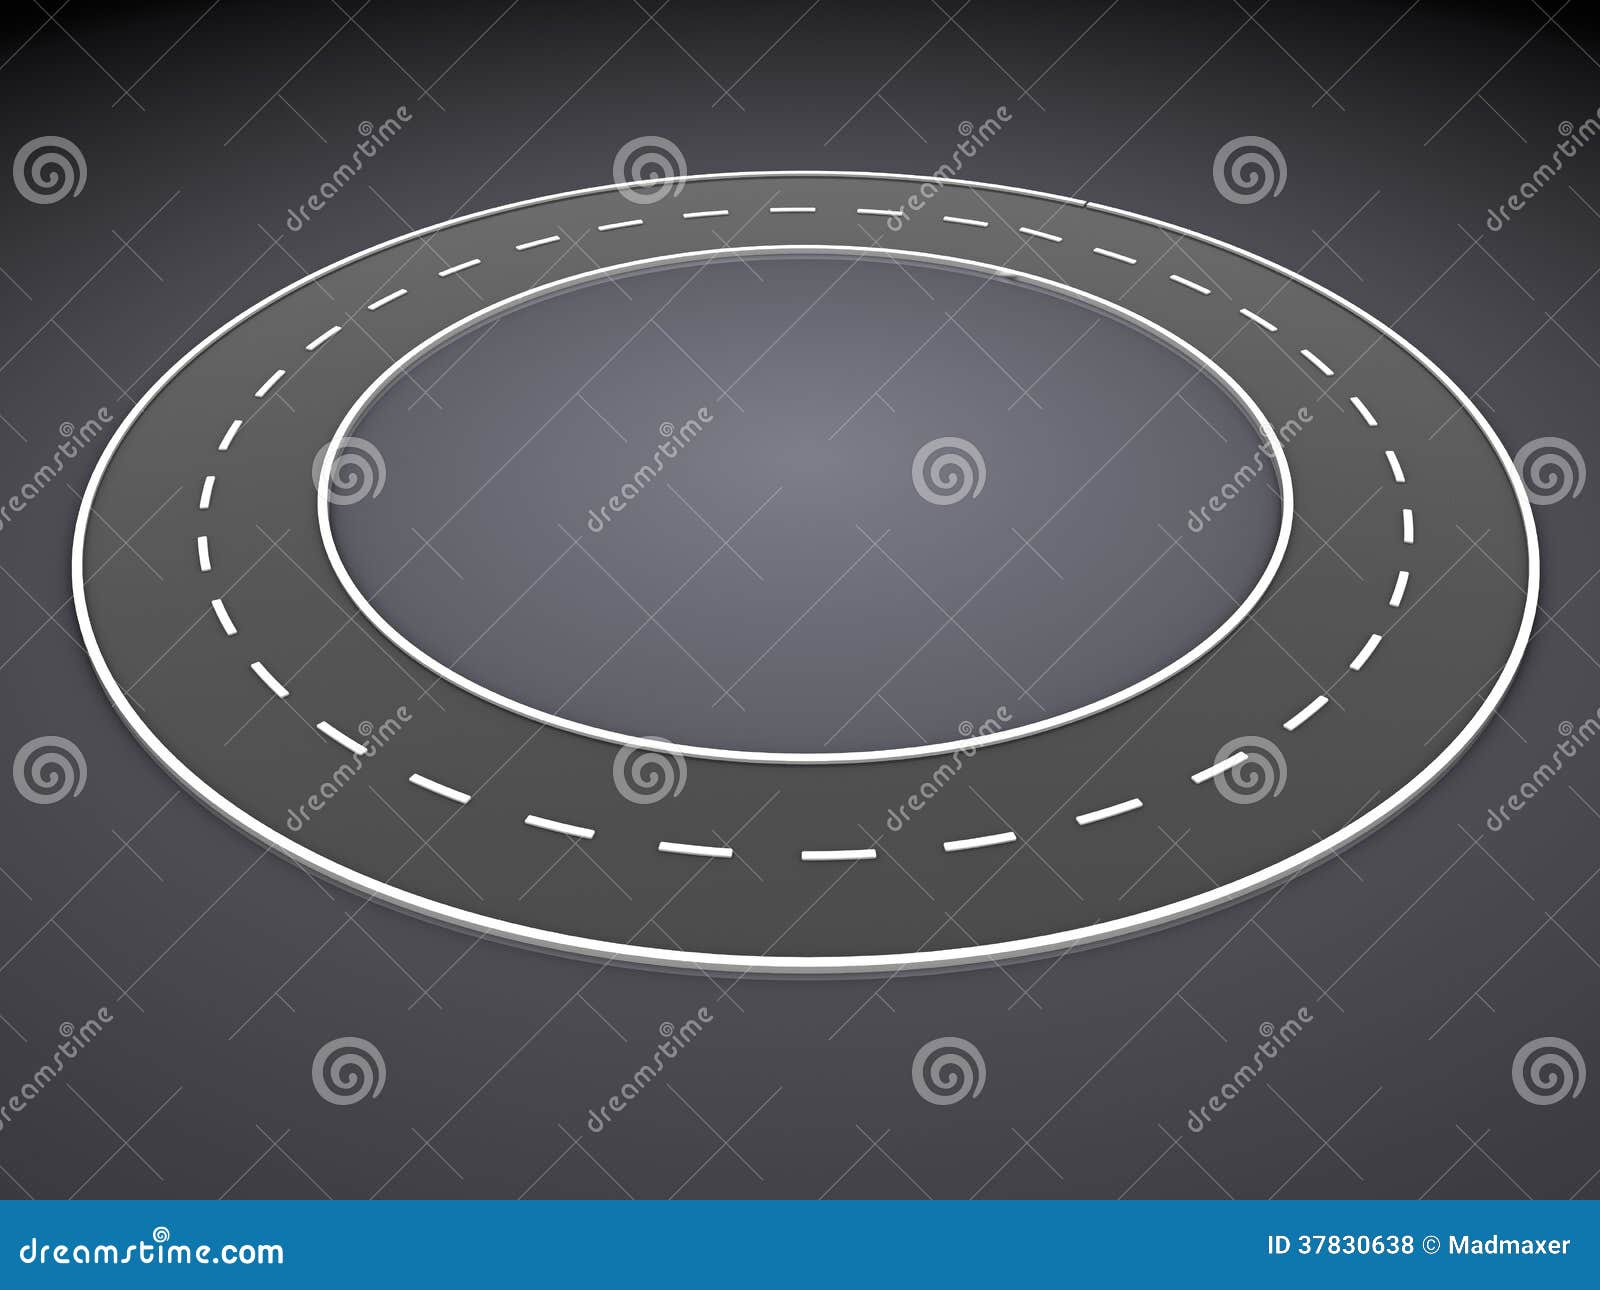 Endless road stock illustration. Illustration of long - 37830638